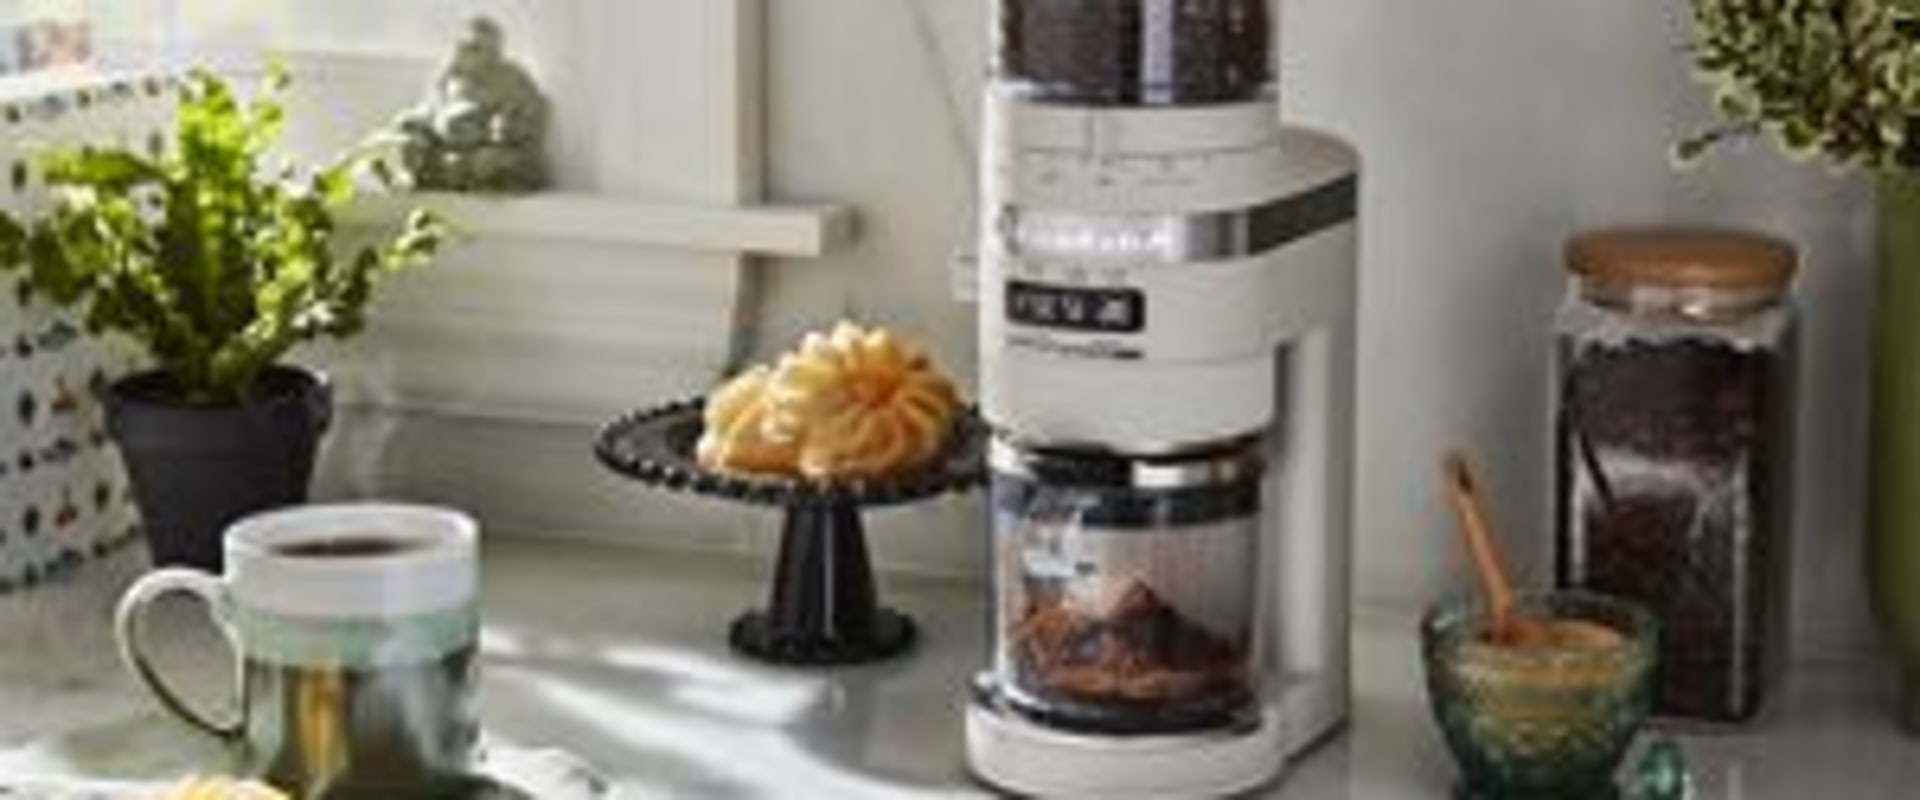 Is it worth getting a coffee grinder?